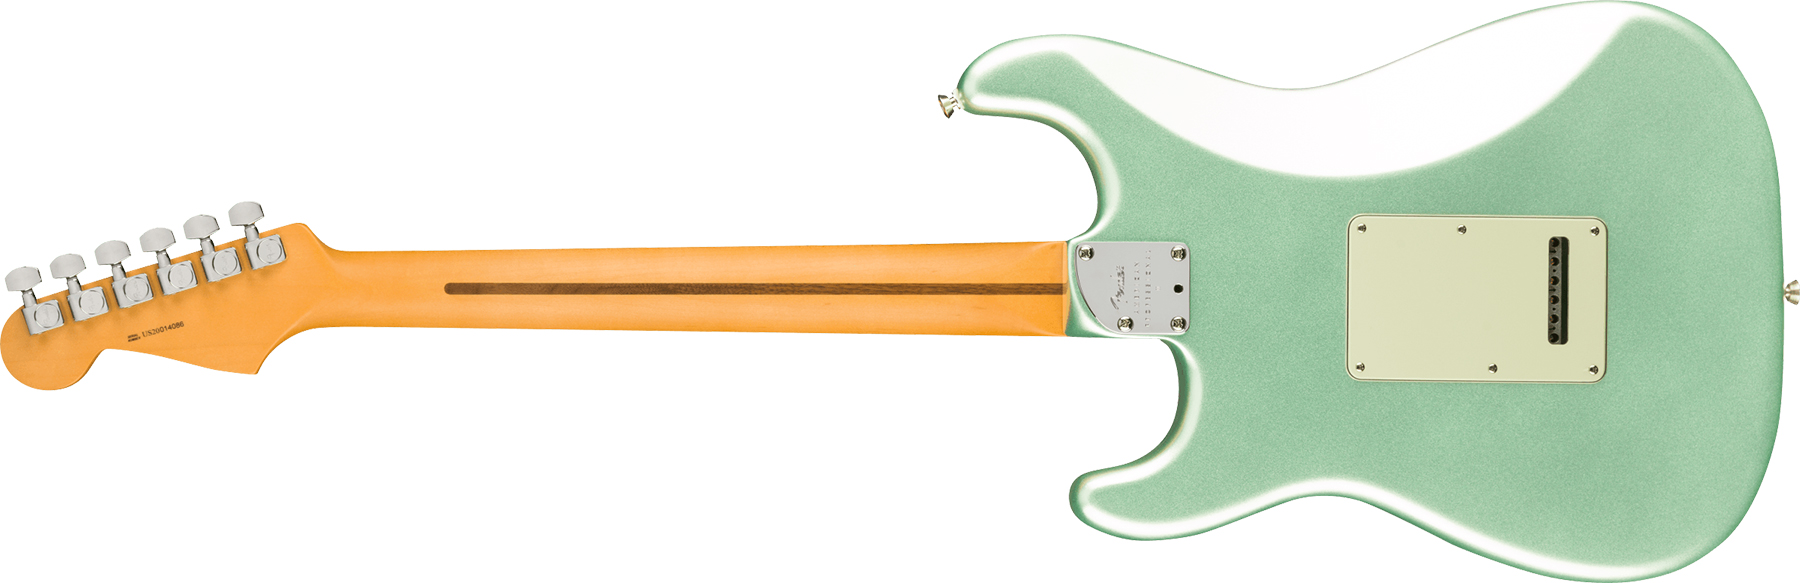 Fender Strat American Professional Ii Usa Mn - Mystic Surf Green - Guitare Électrique Forme Str - Variation 1